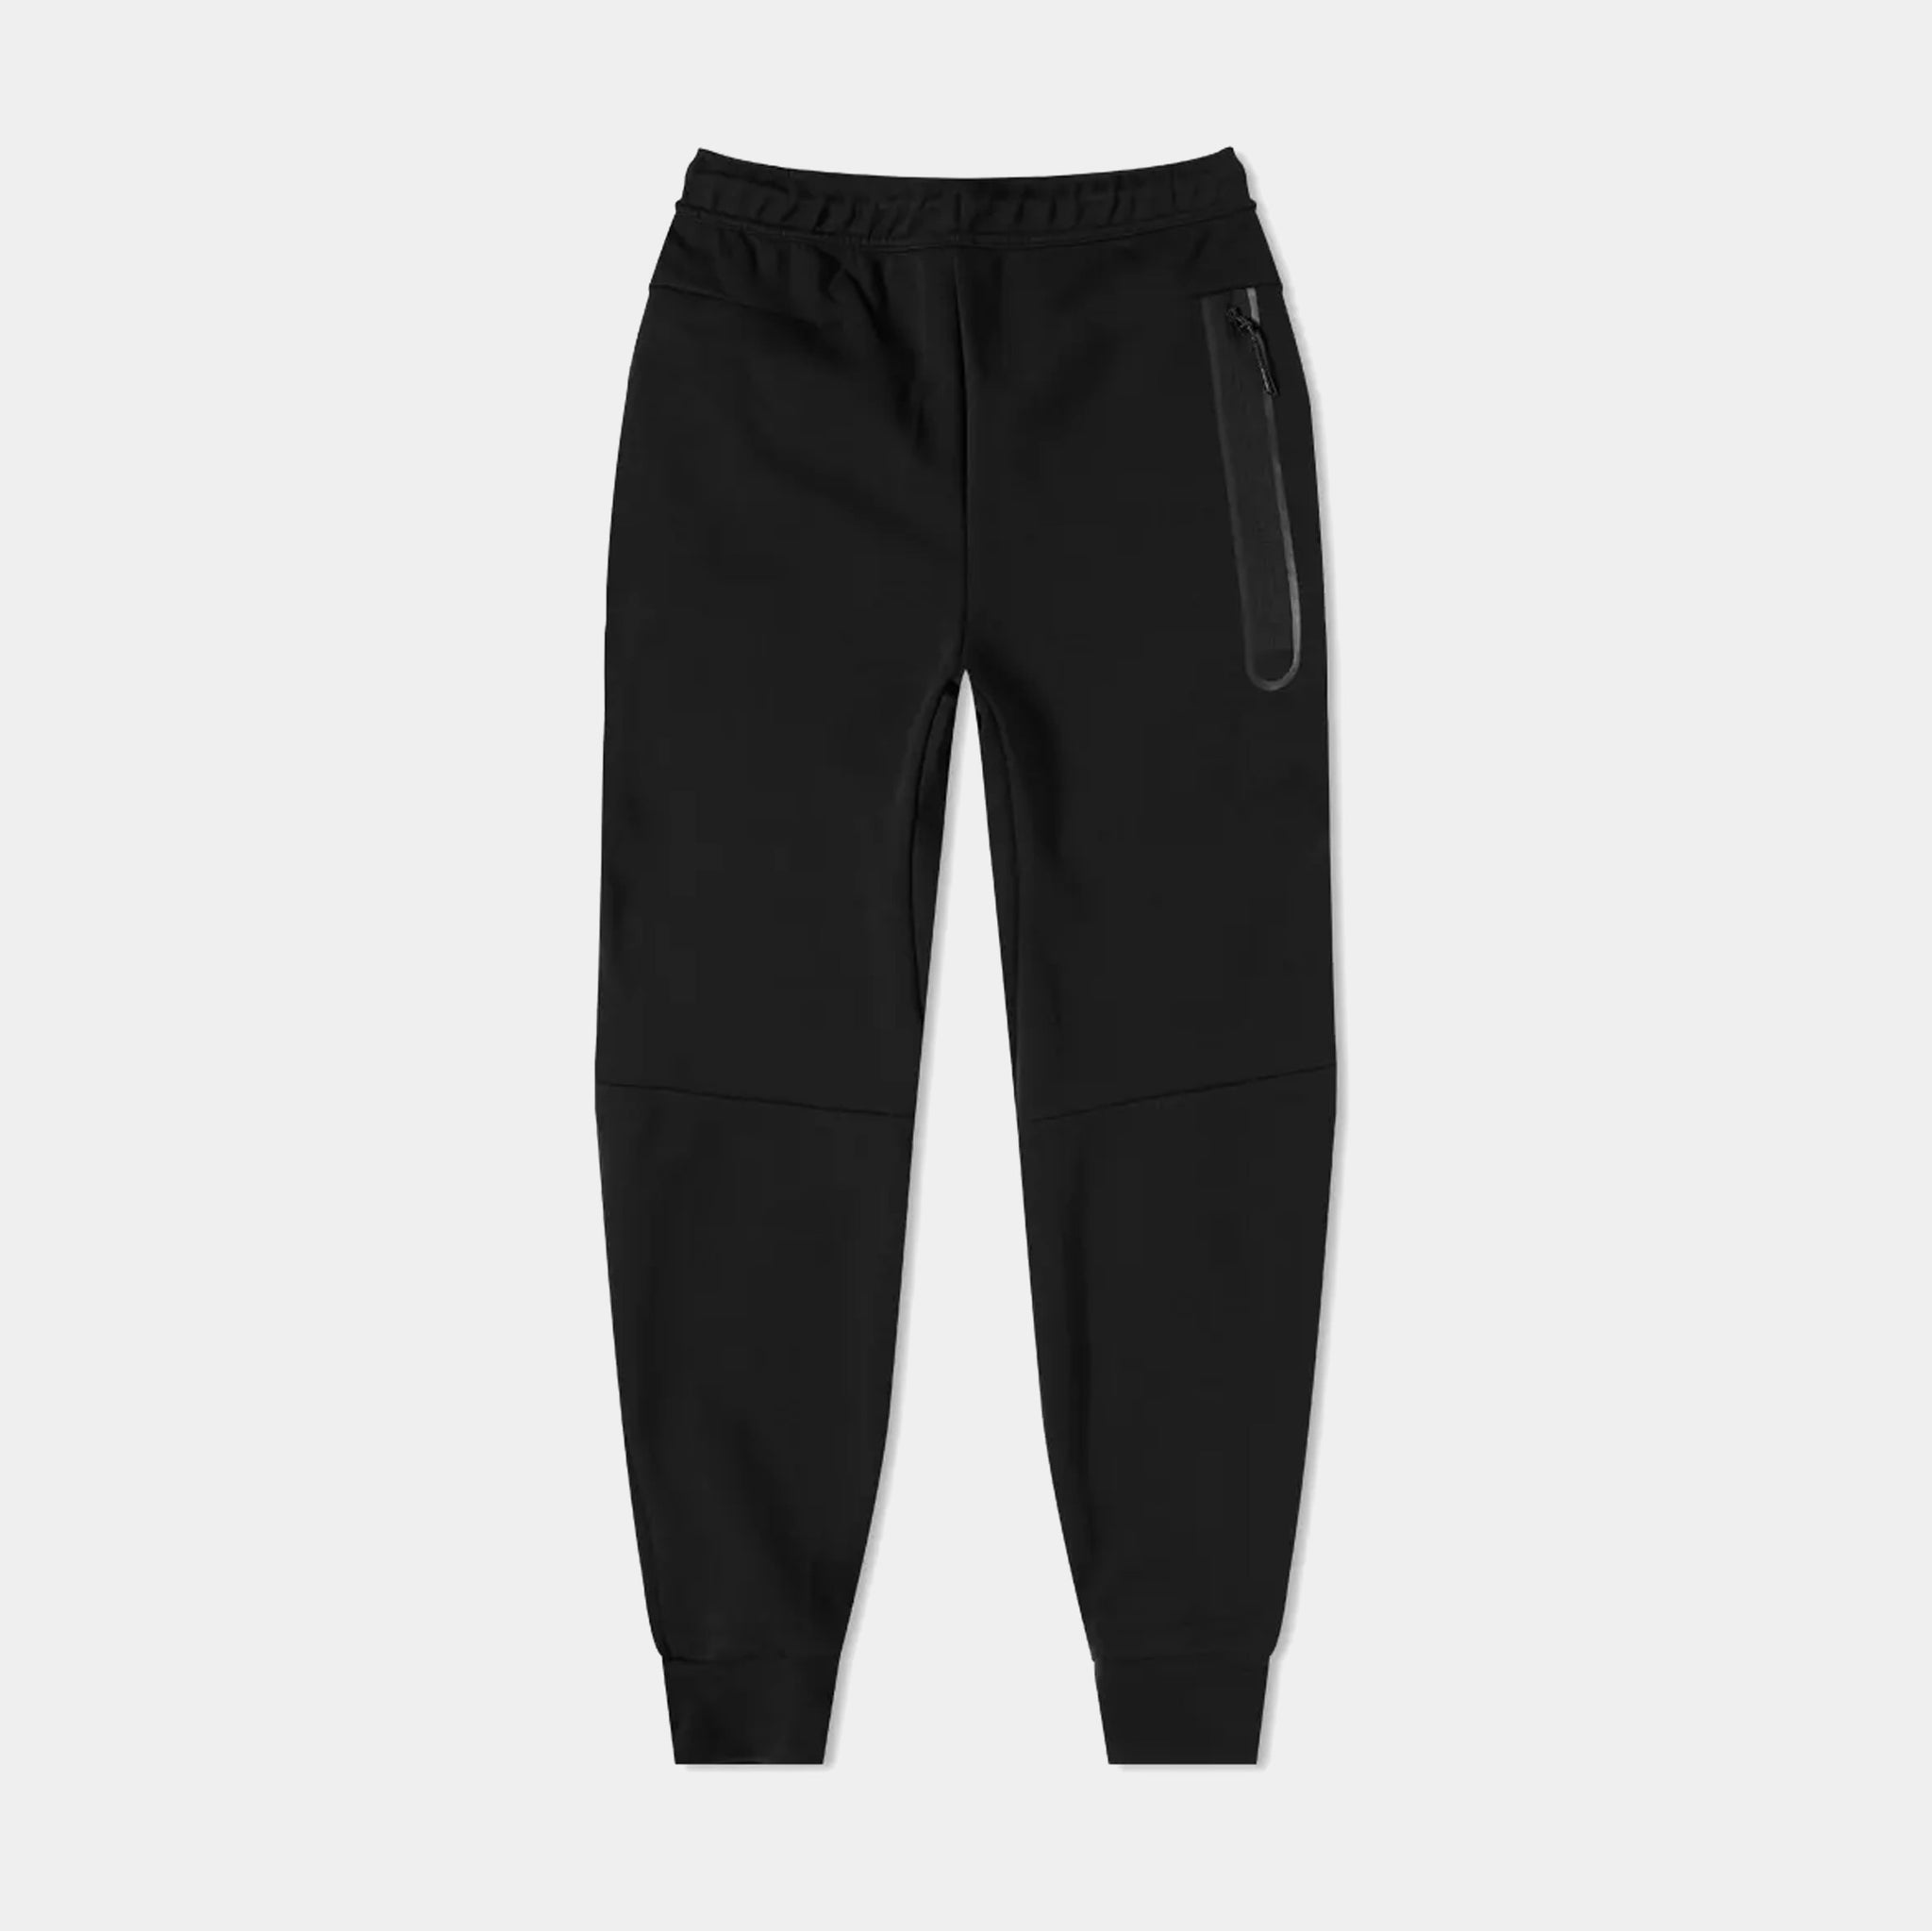 Men's Nike USA Tech Fleece Black Jogger Pants